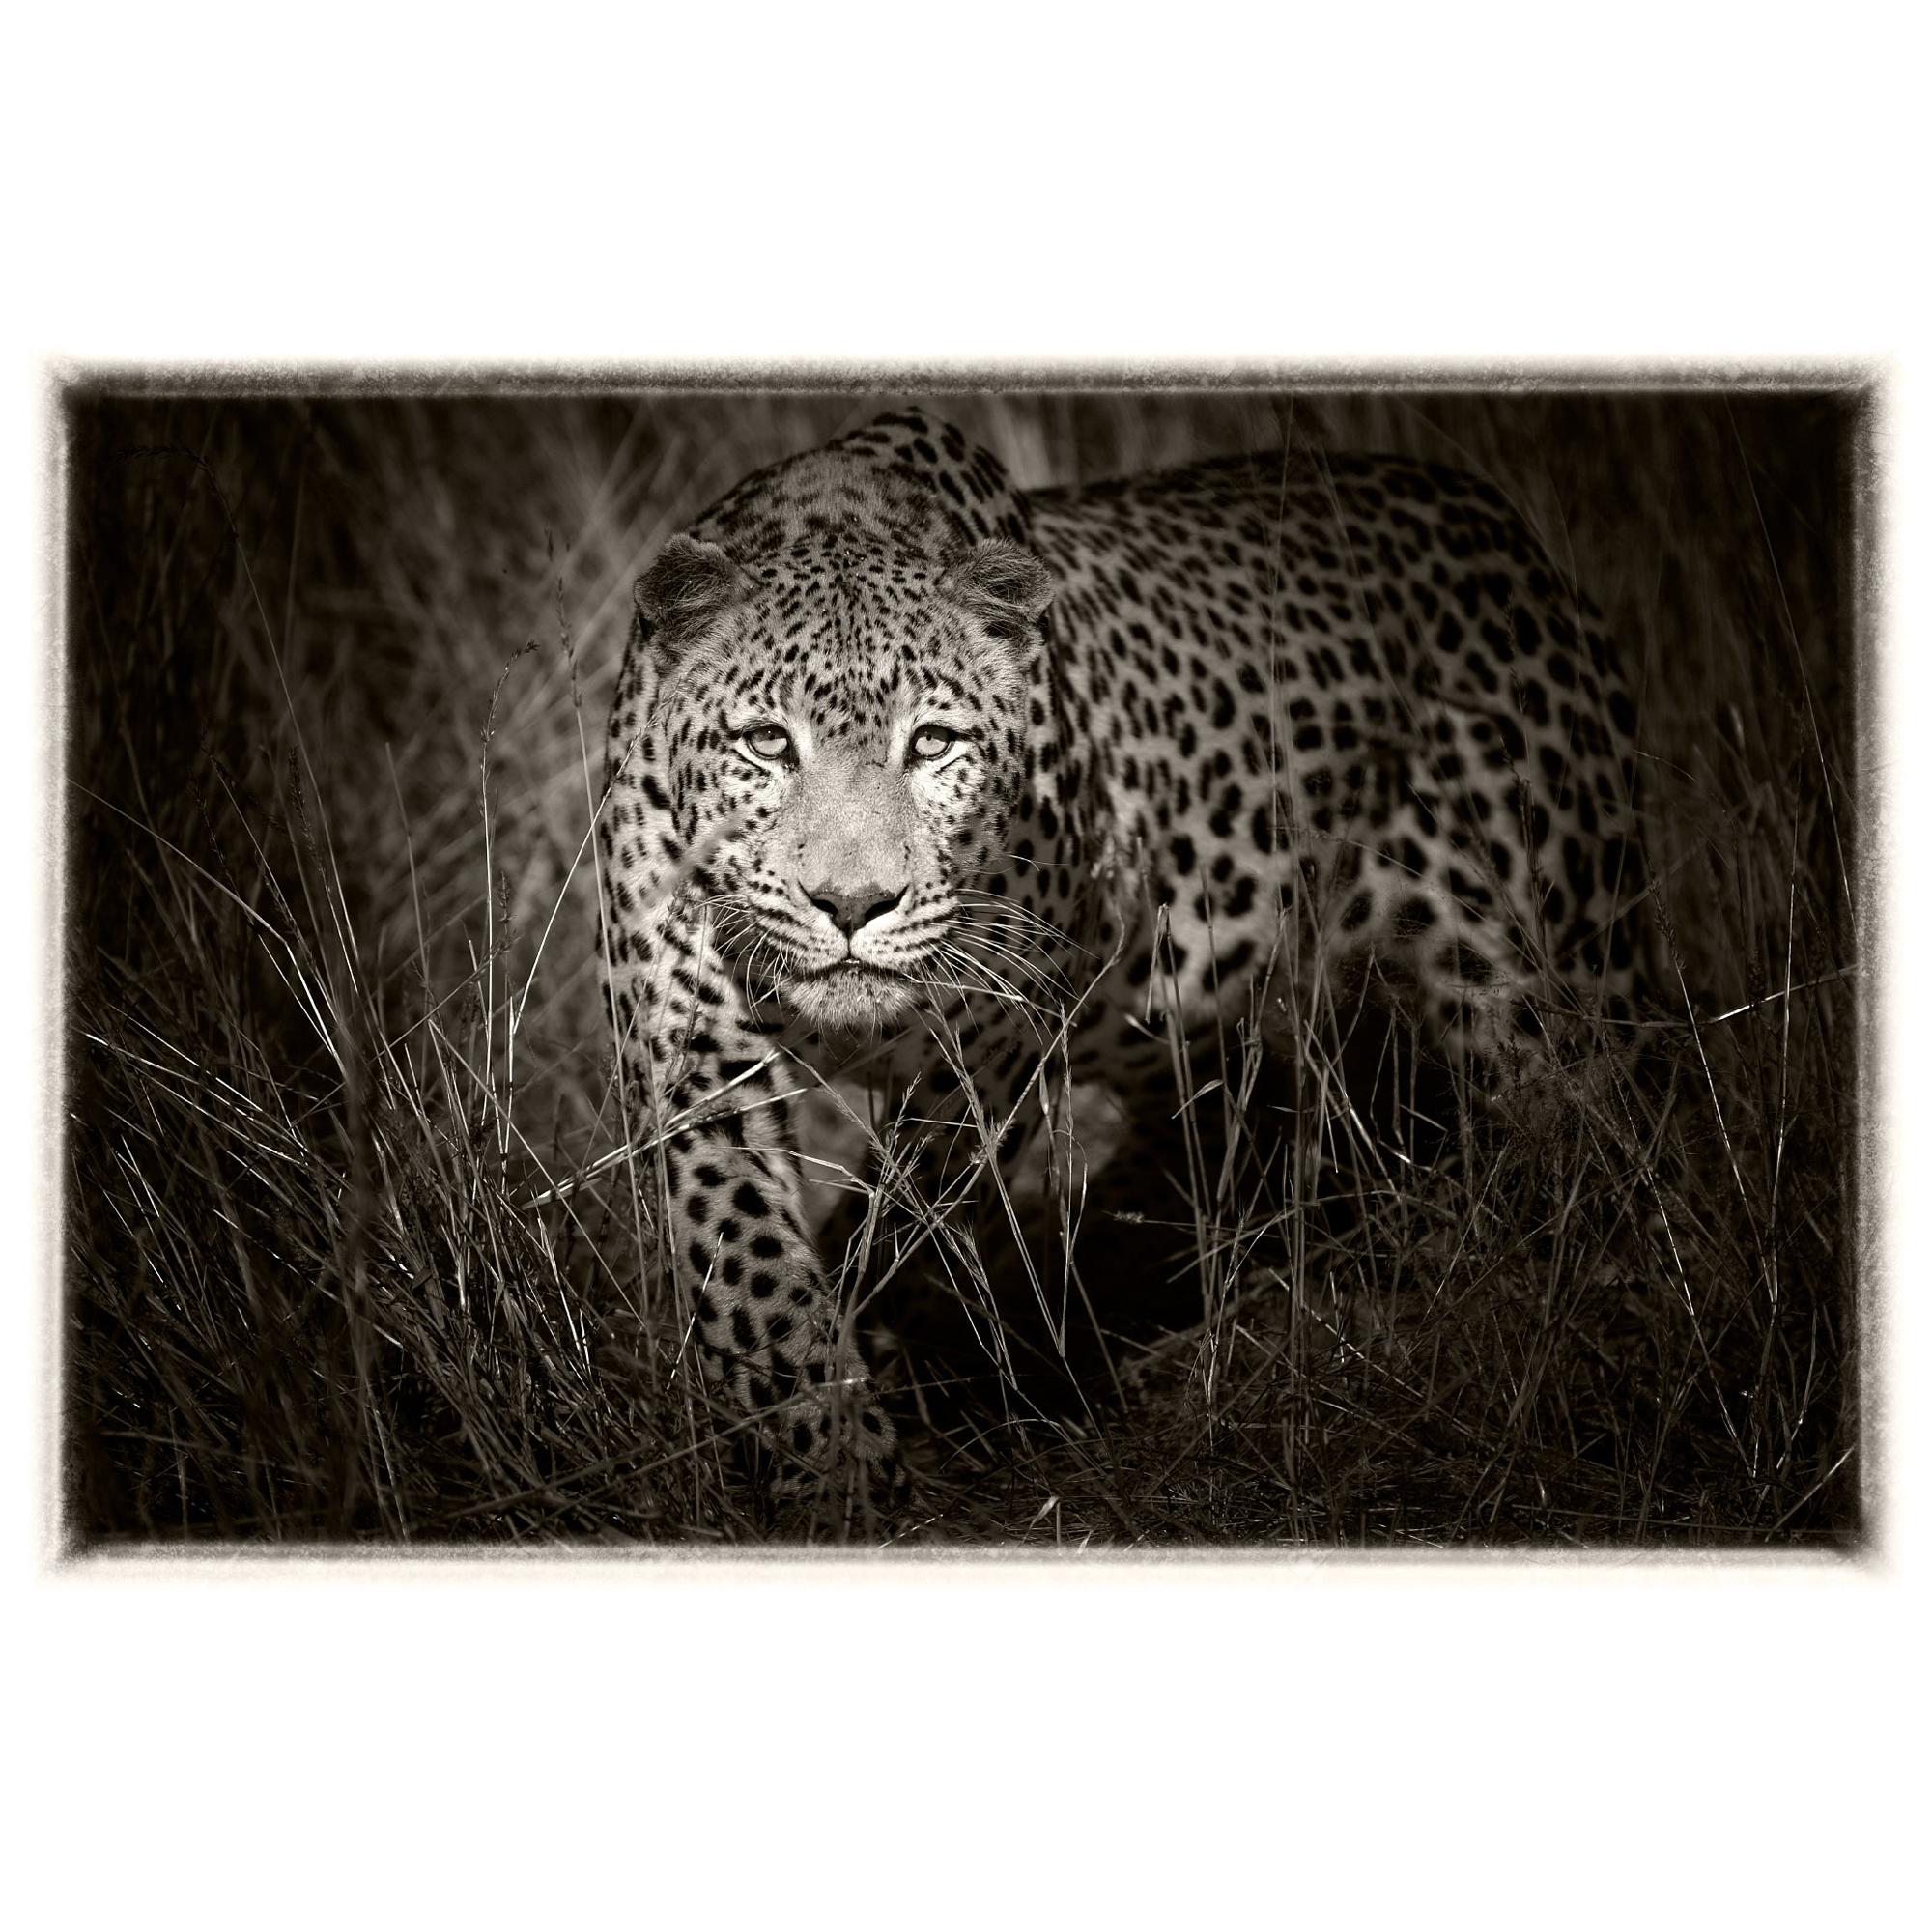 Etosha Leopard II, Black and White Photography, Fine Art Print by Rainer Martini For Sale